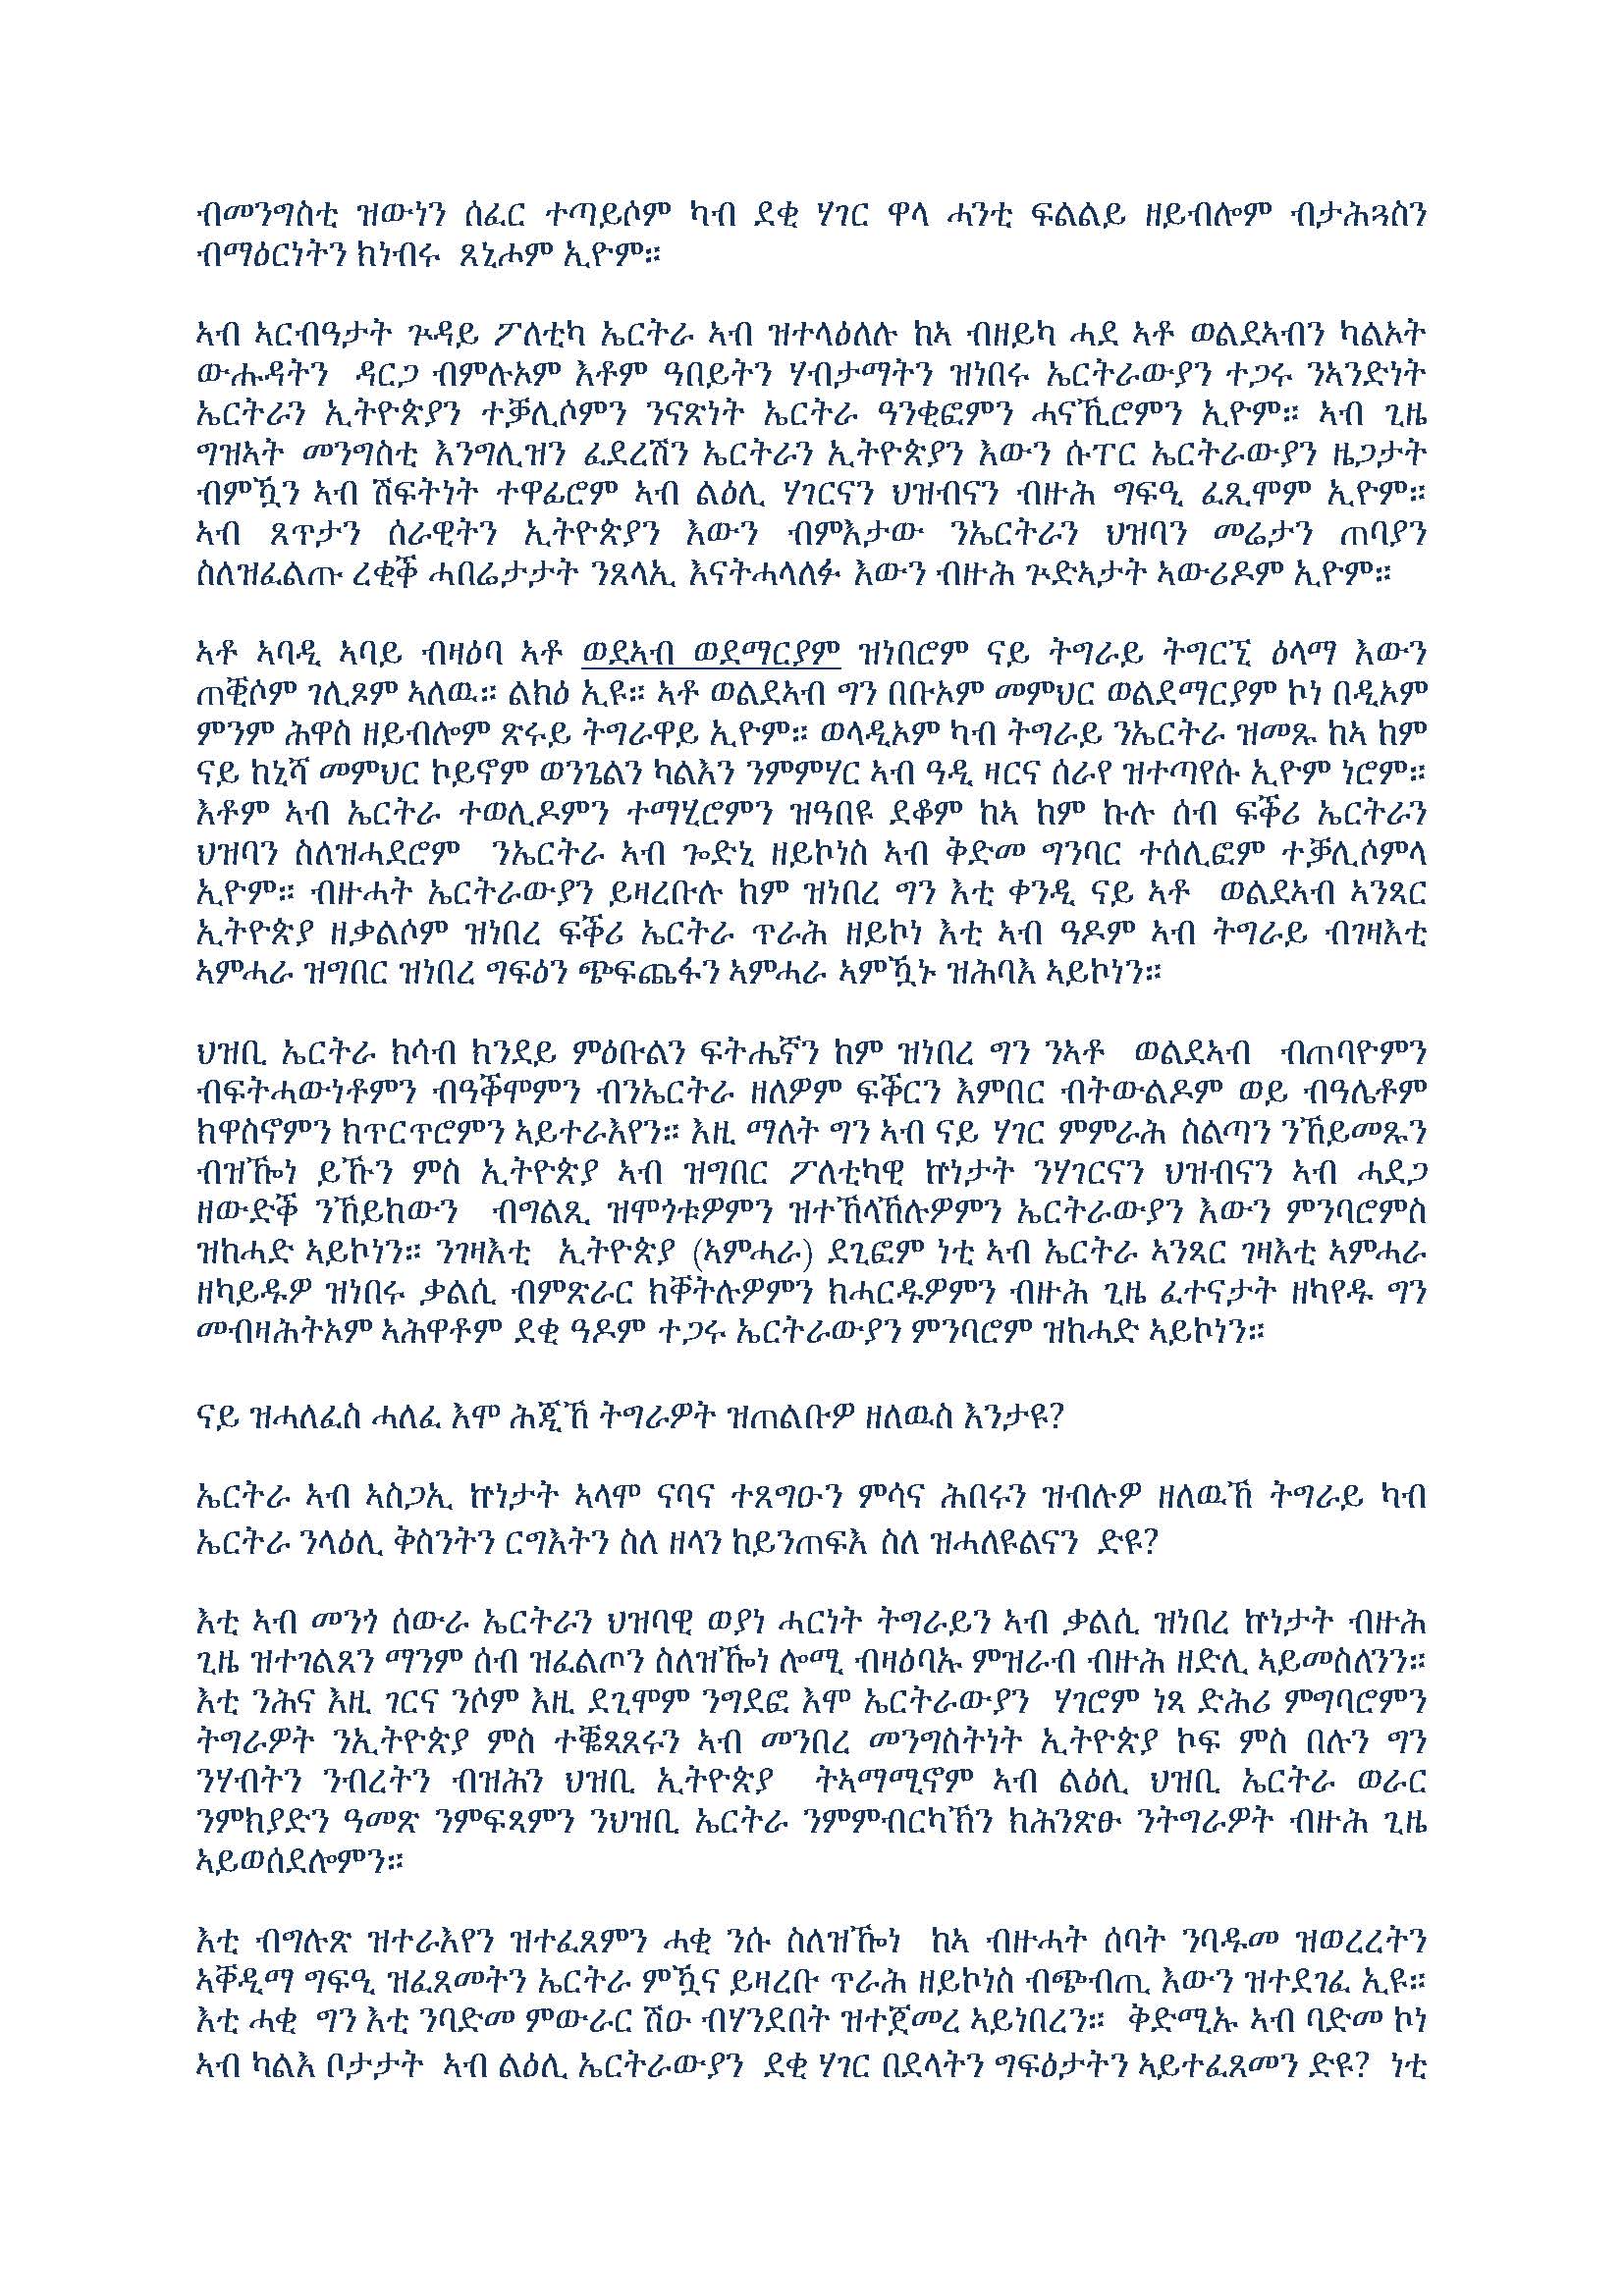 ato-abadi-tigraway-11_page_3